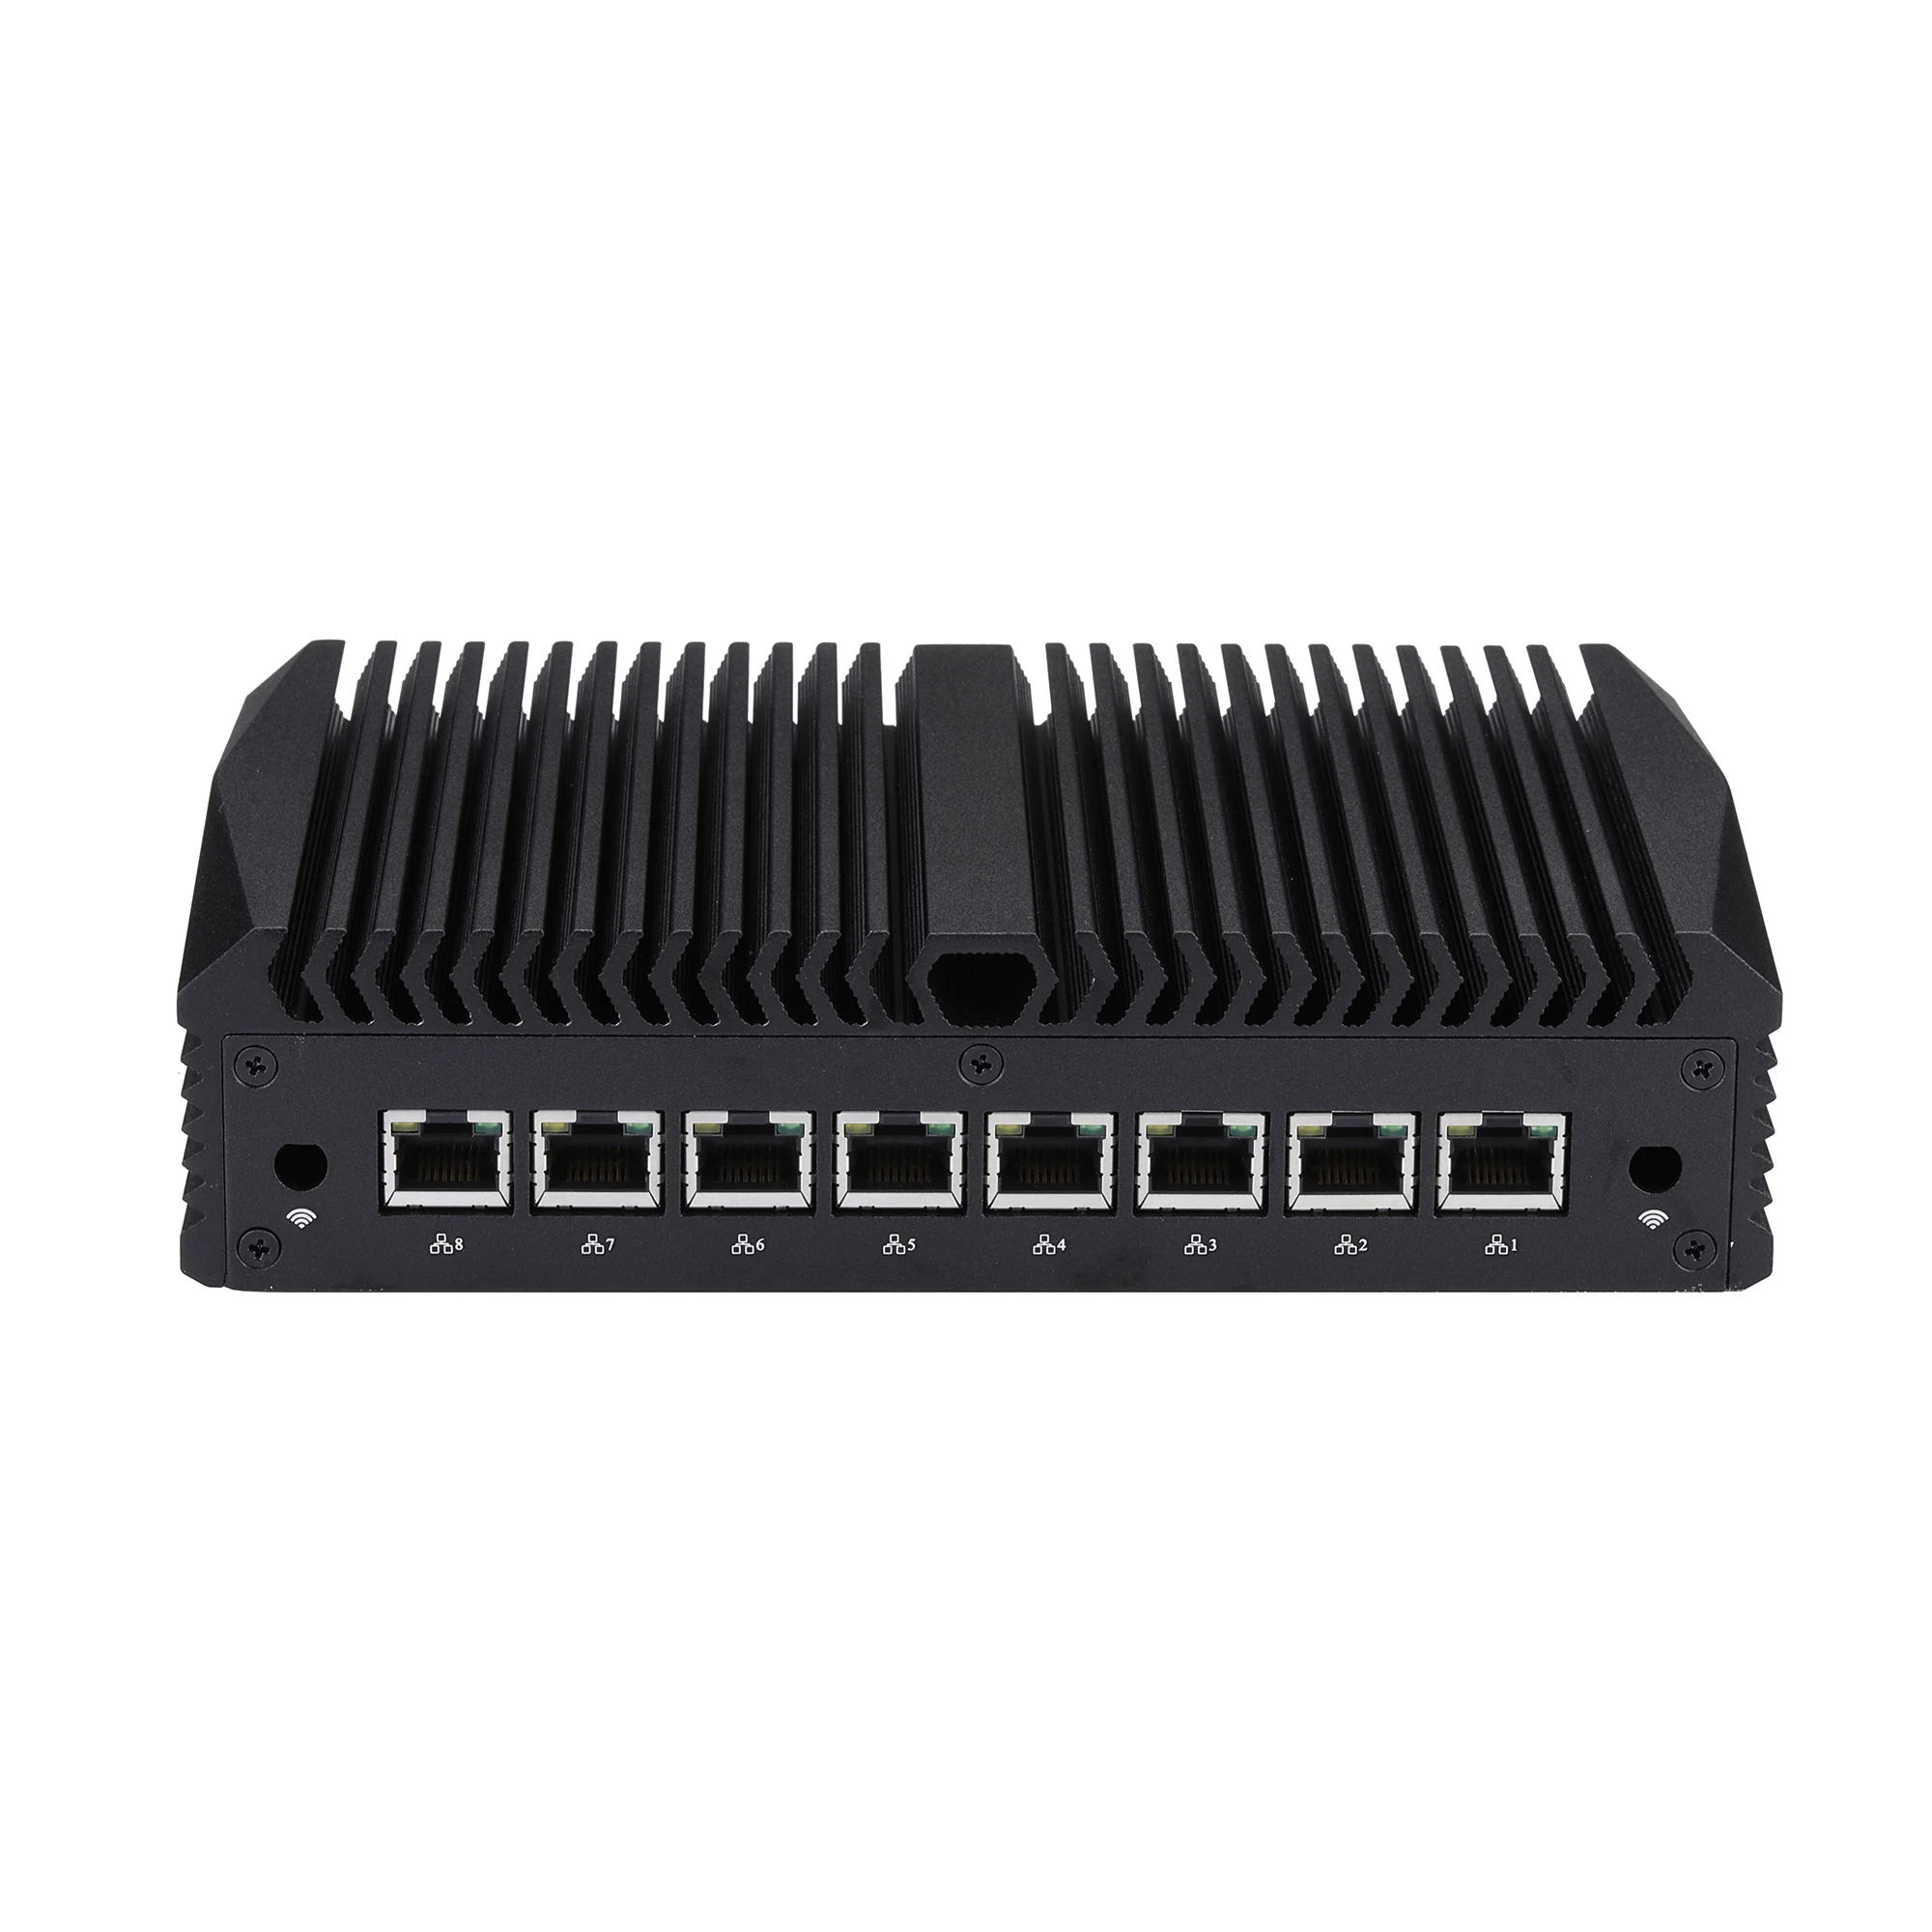 Qotom Firewall Zariadenie Core i3-5005U Dual Jadier Procesora Dizajn bez ventilátora Mini PC Q335GE